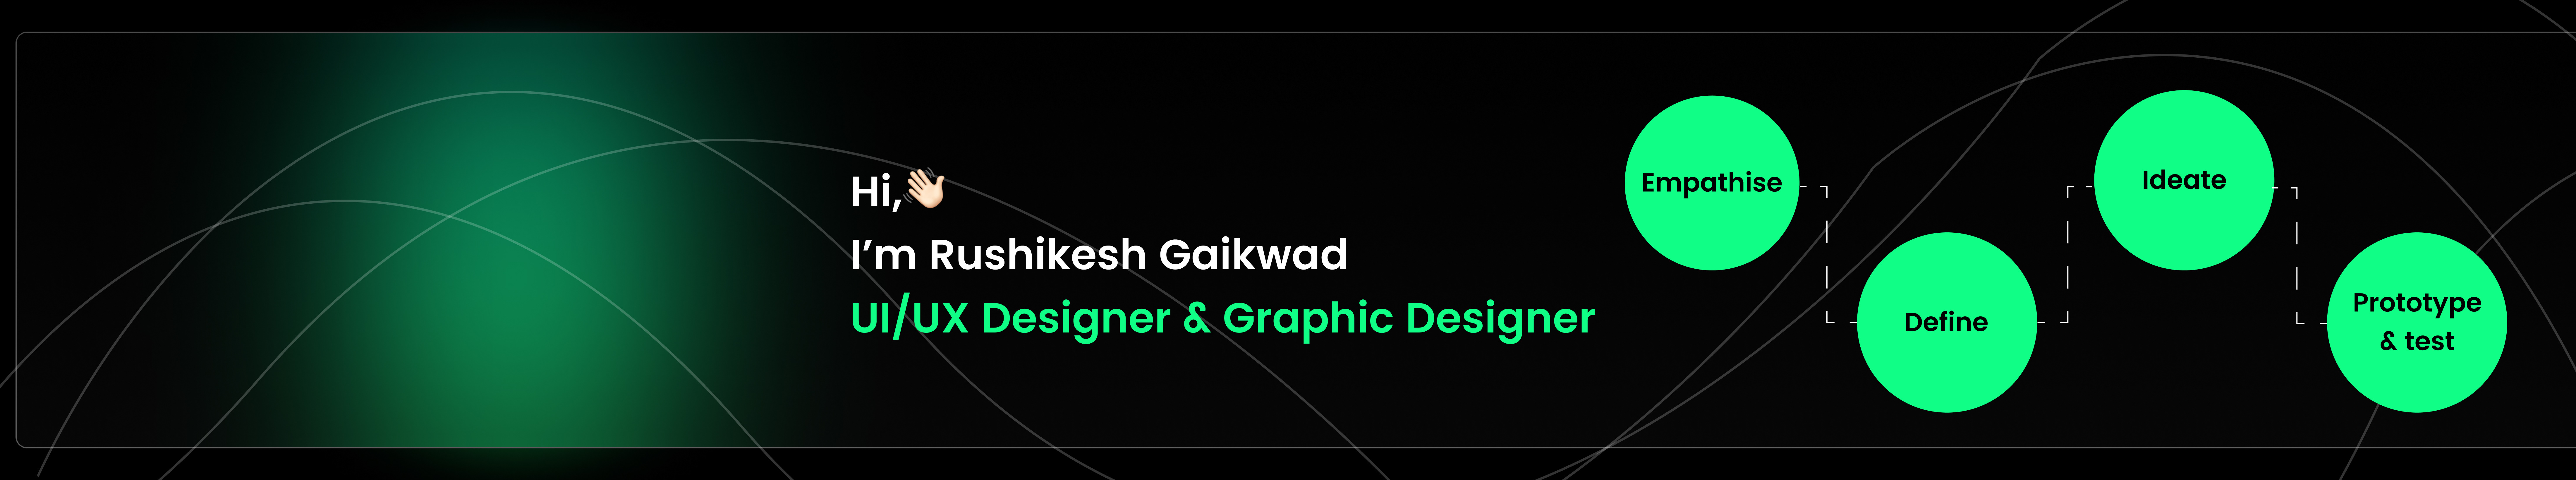 Baner profilu użytkownika Rushikesh Gaikwad